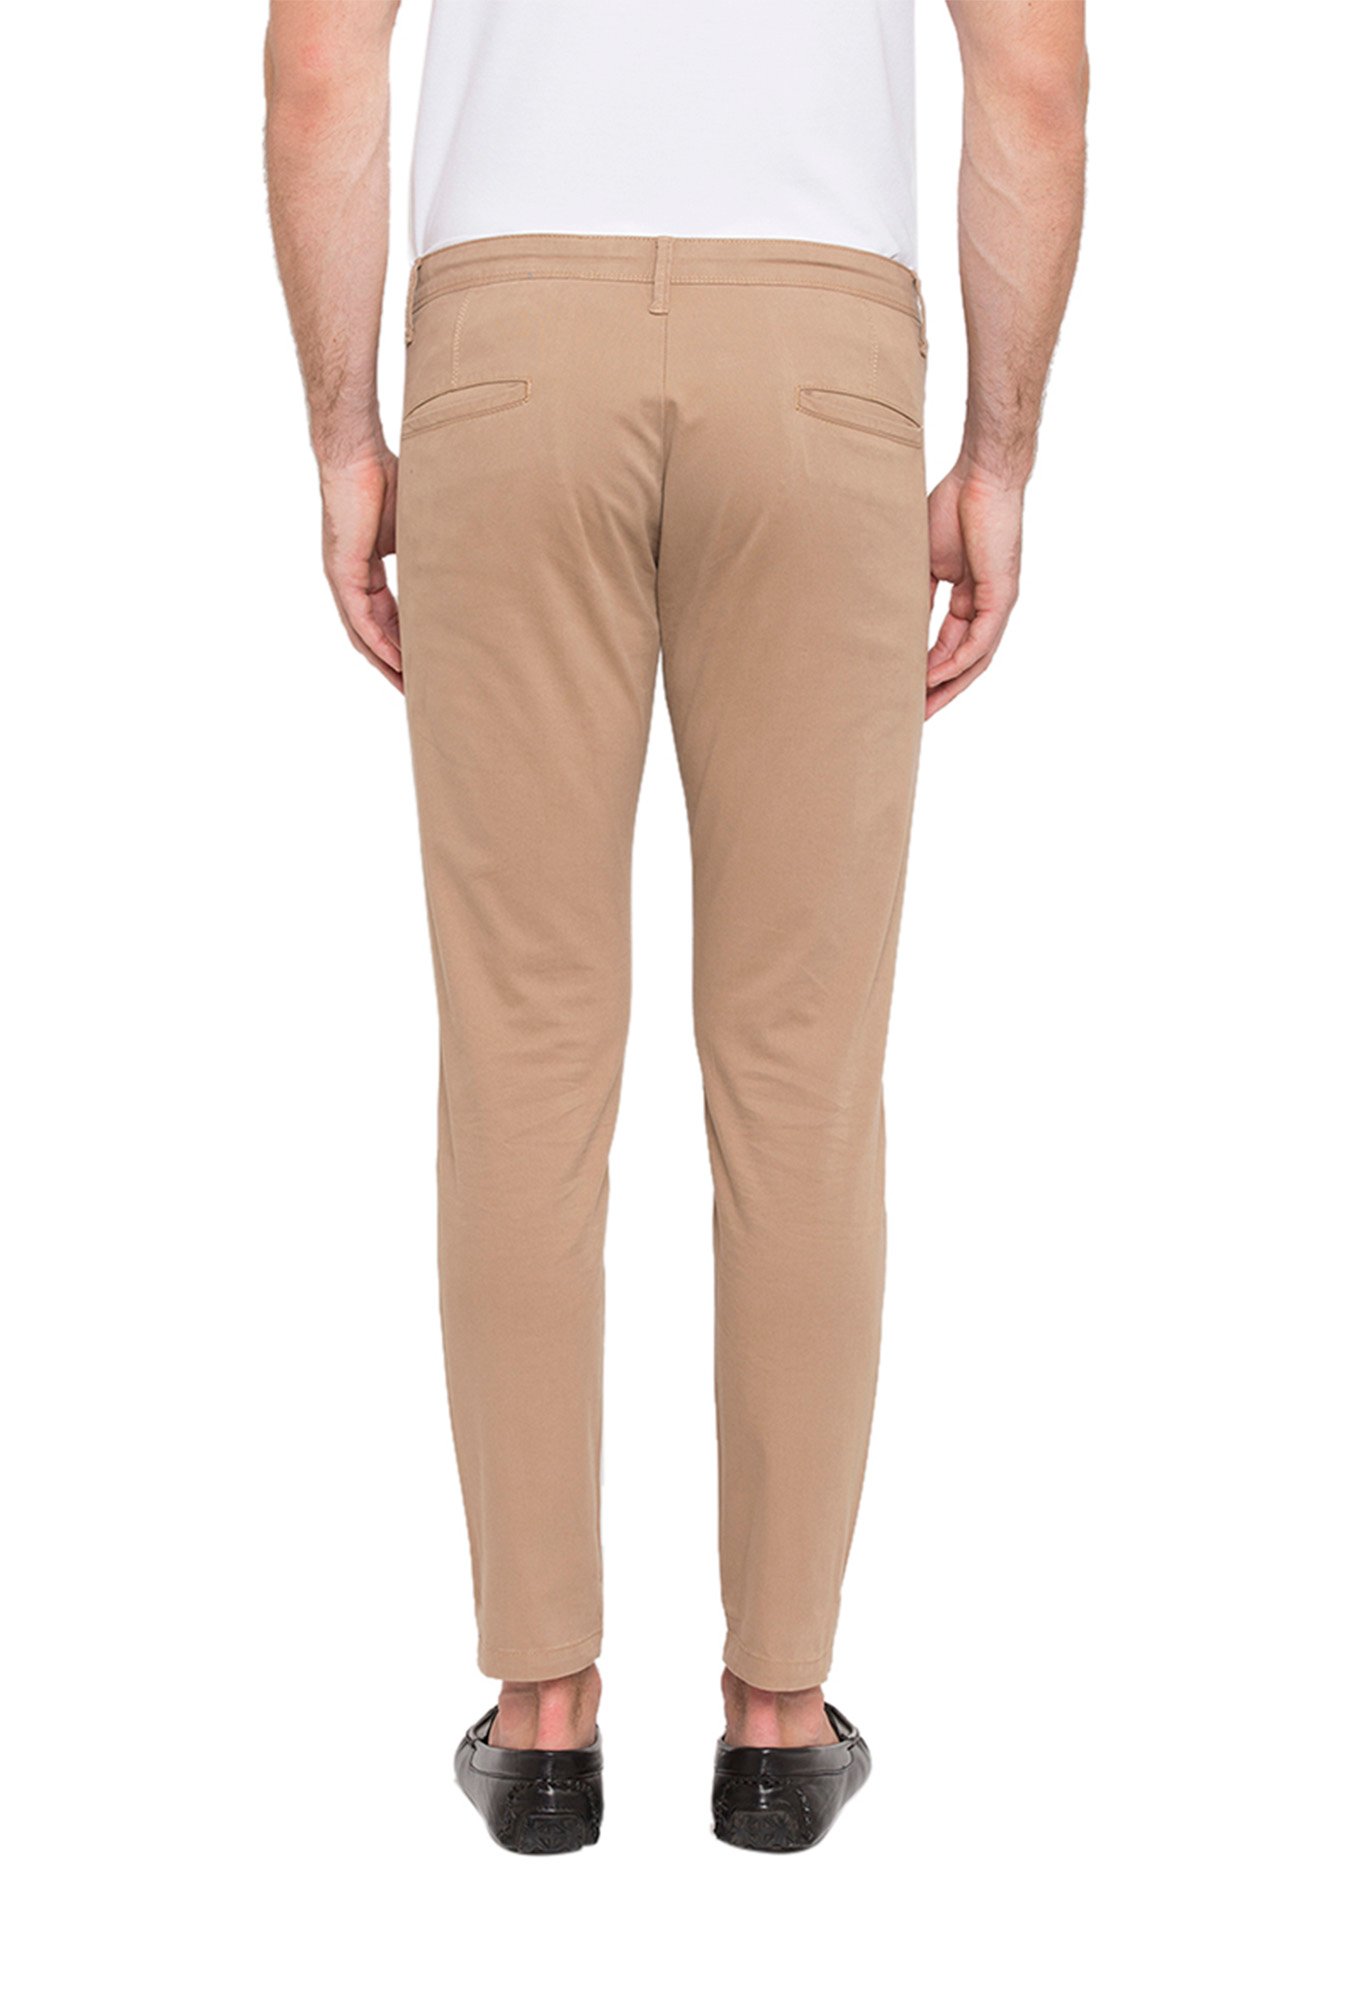 Buy Spykar Mens Cotton Sand Khaki Solid Trousers at Amazonin